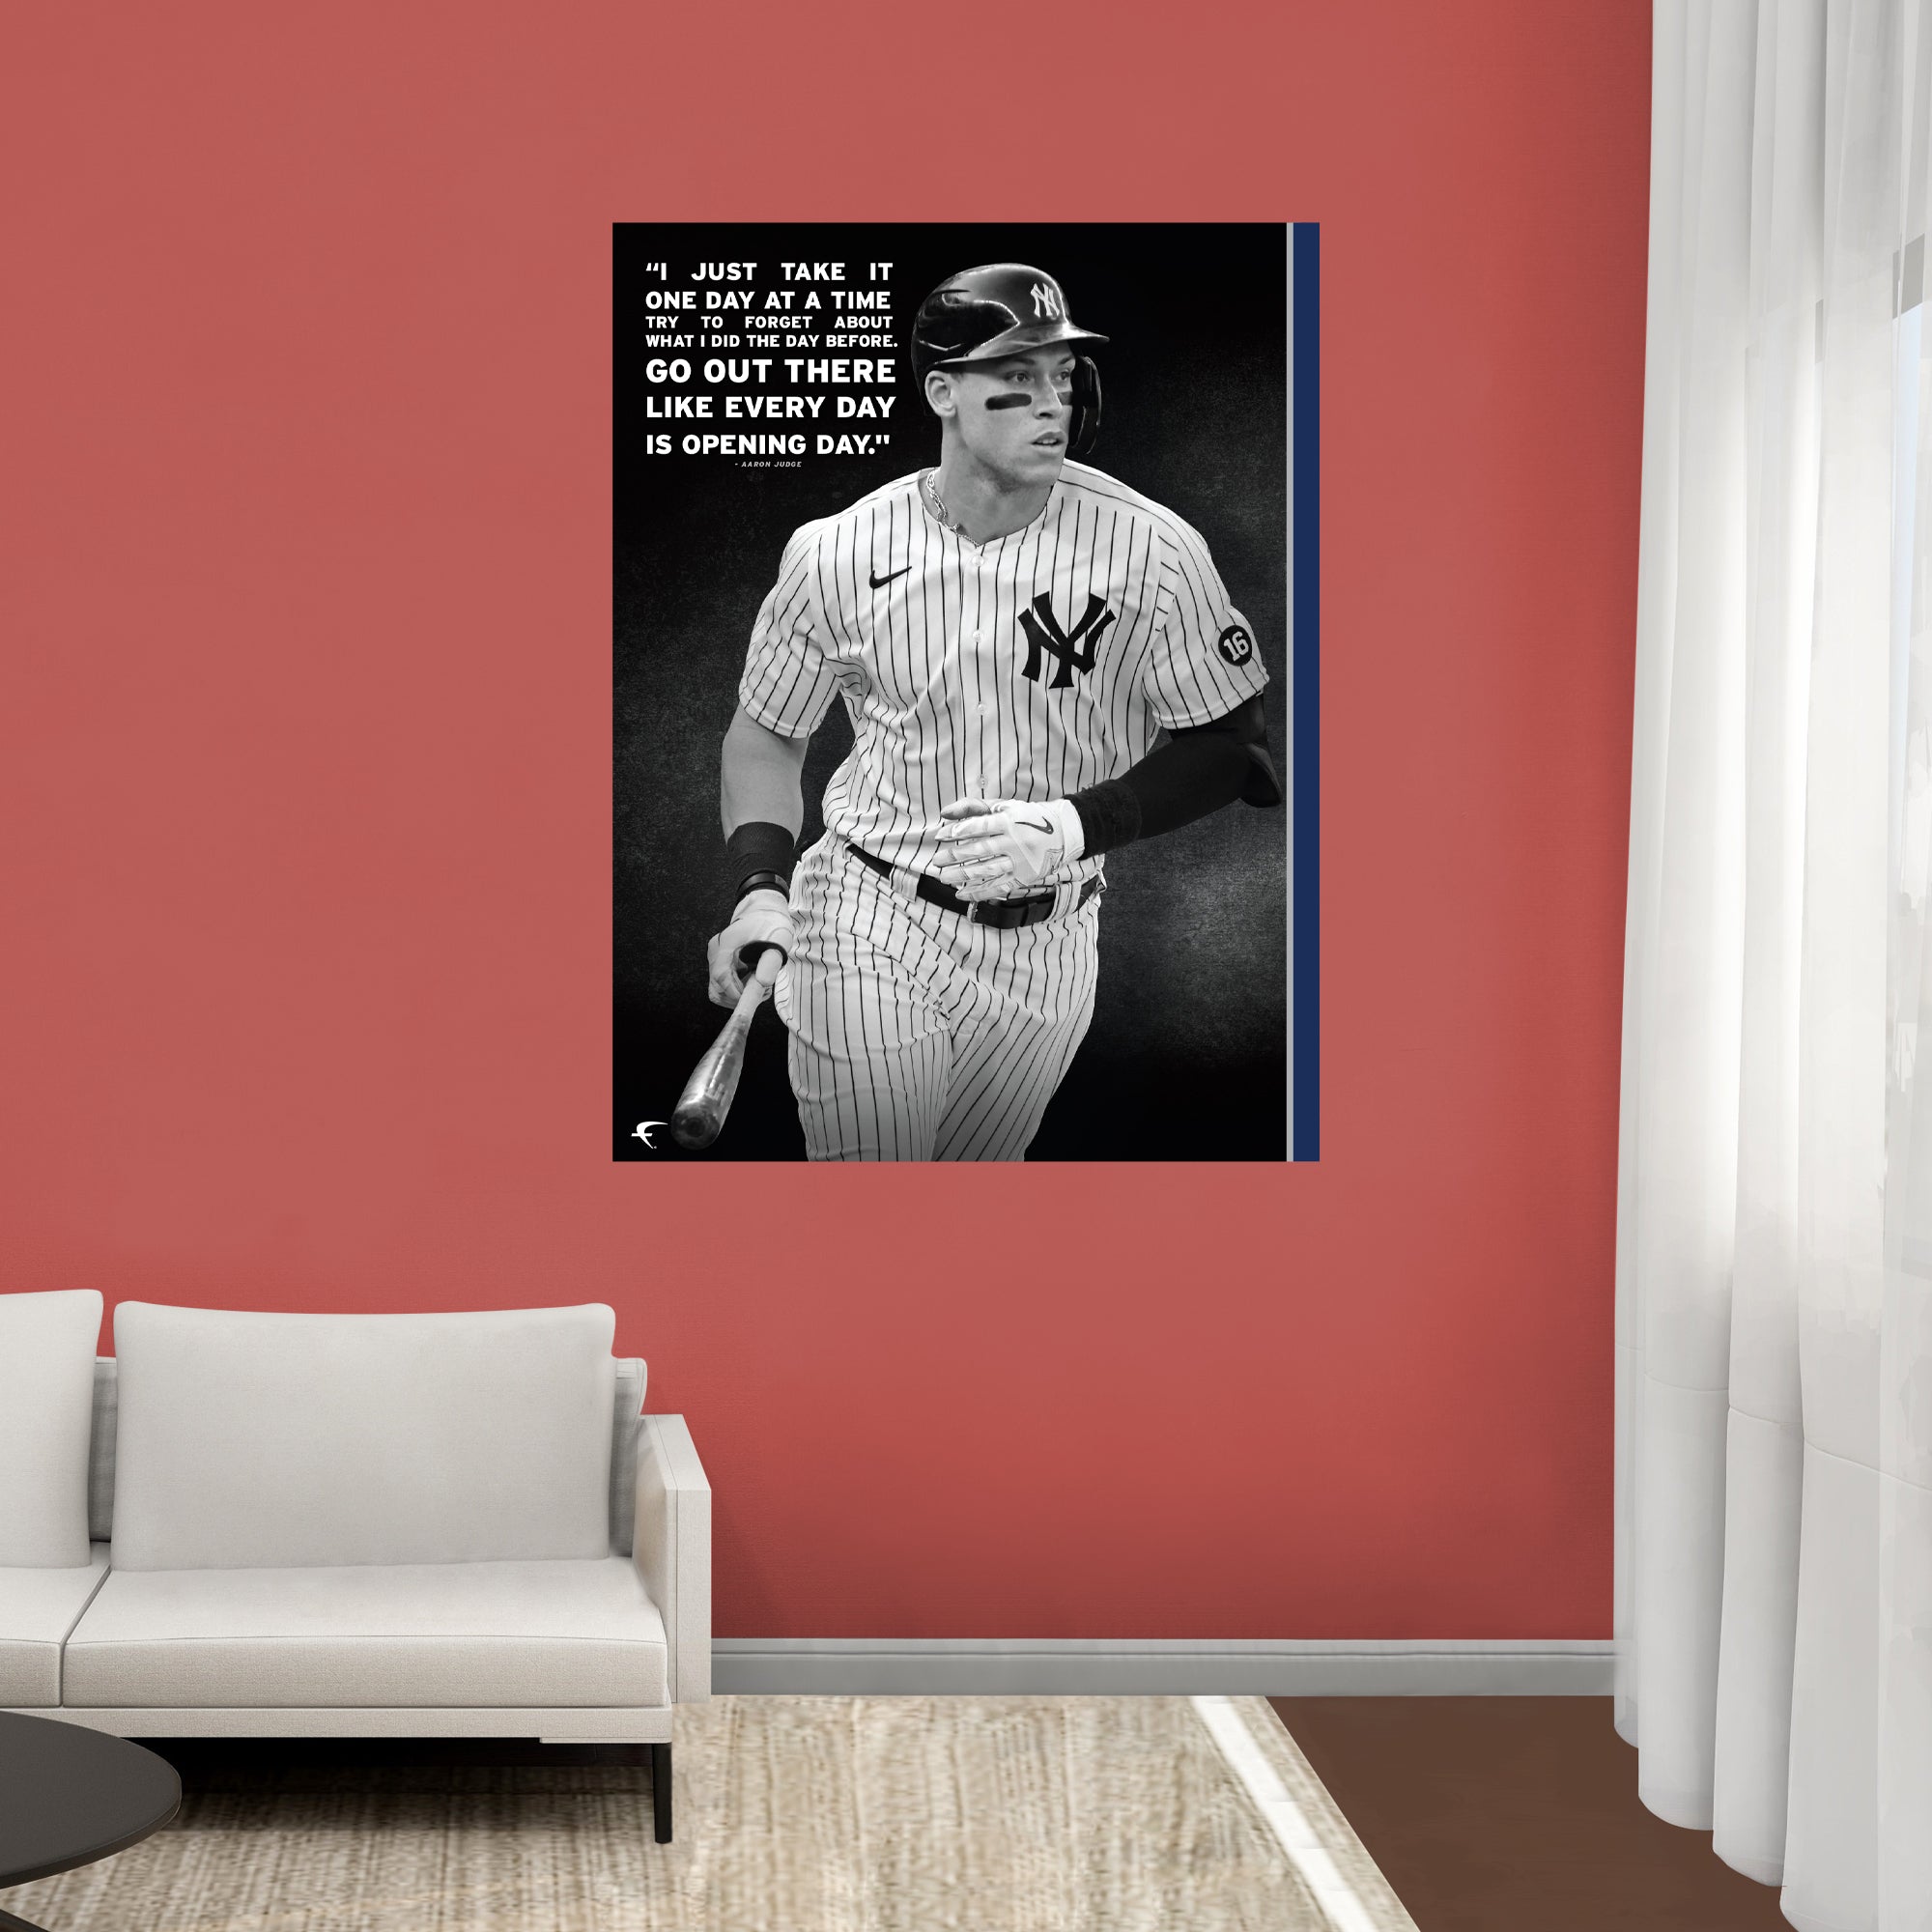 Aaron Judge Pinstripe Blast New York Yankees MLB Signature Action Poster  - Trends Int'l.